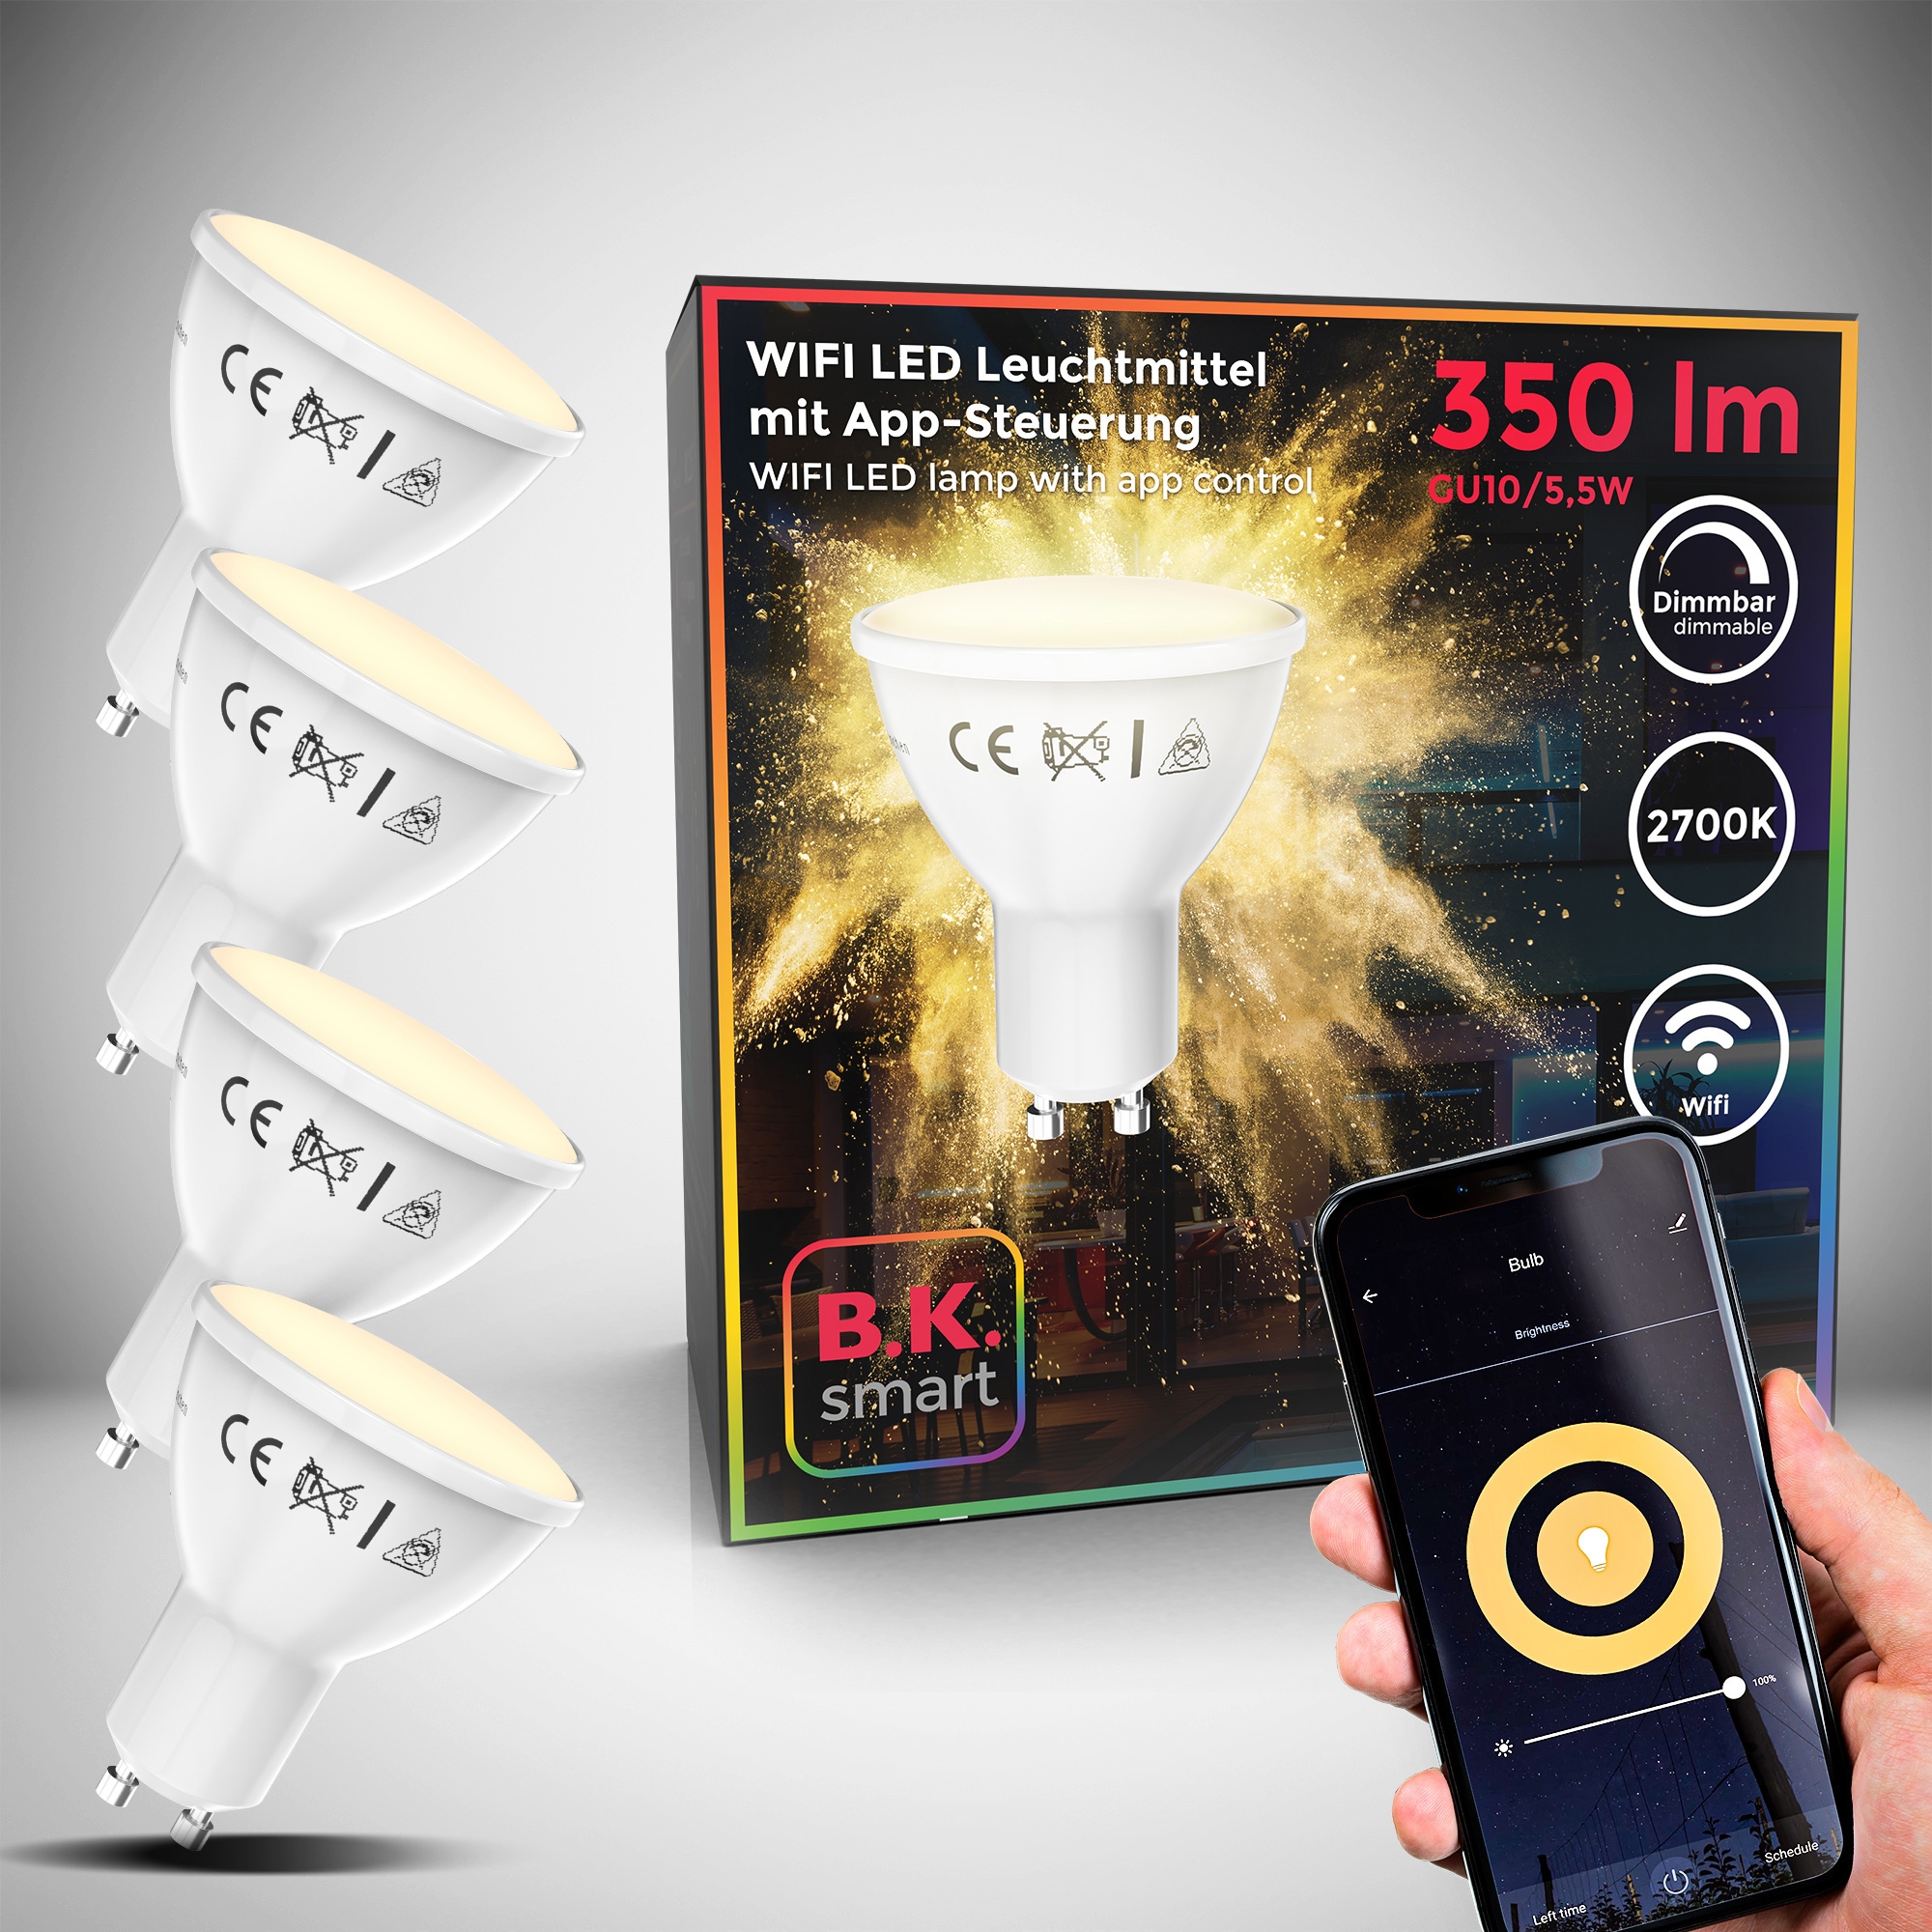 B.K.Licht 4 App-Steuerung, Smart GU10, bei RGB, dimmbar OTTO Warmweiß, LED-Leuchtmittel, St., Home WiFi, LED-Lampe, online